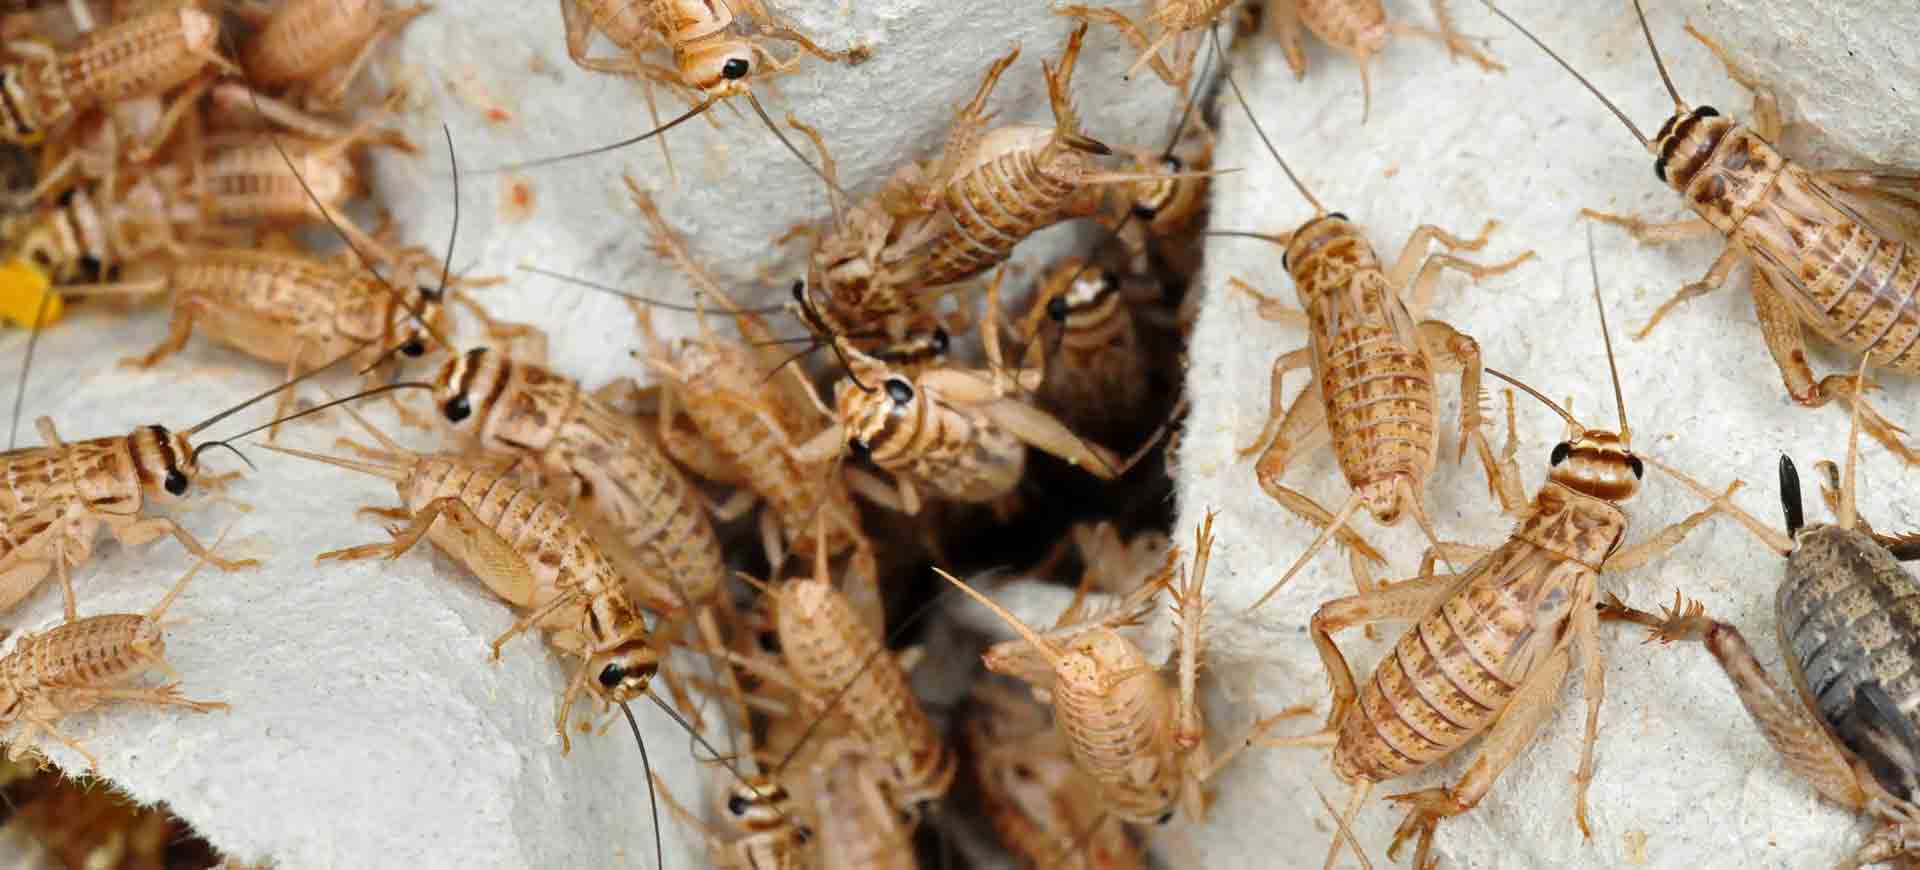 cricket pest control scripps ranch